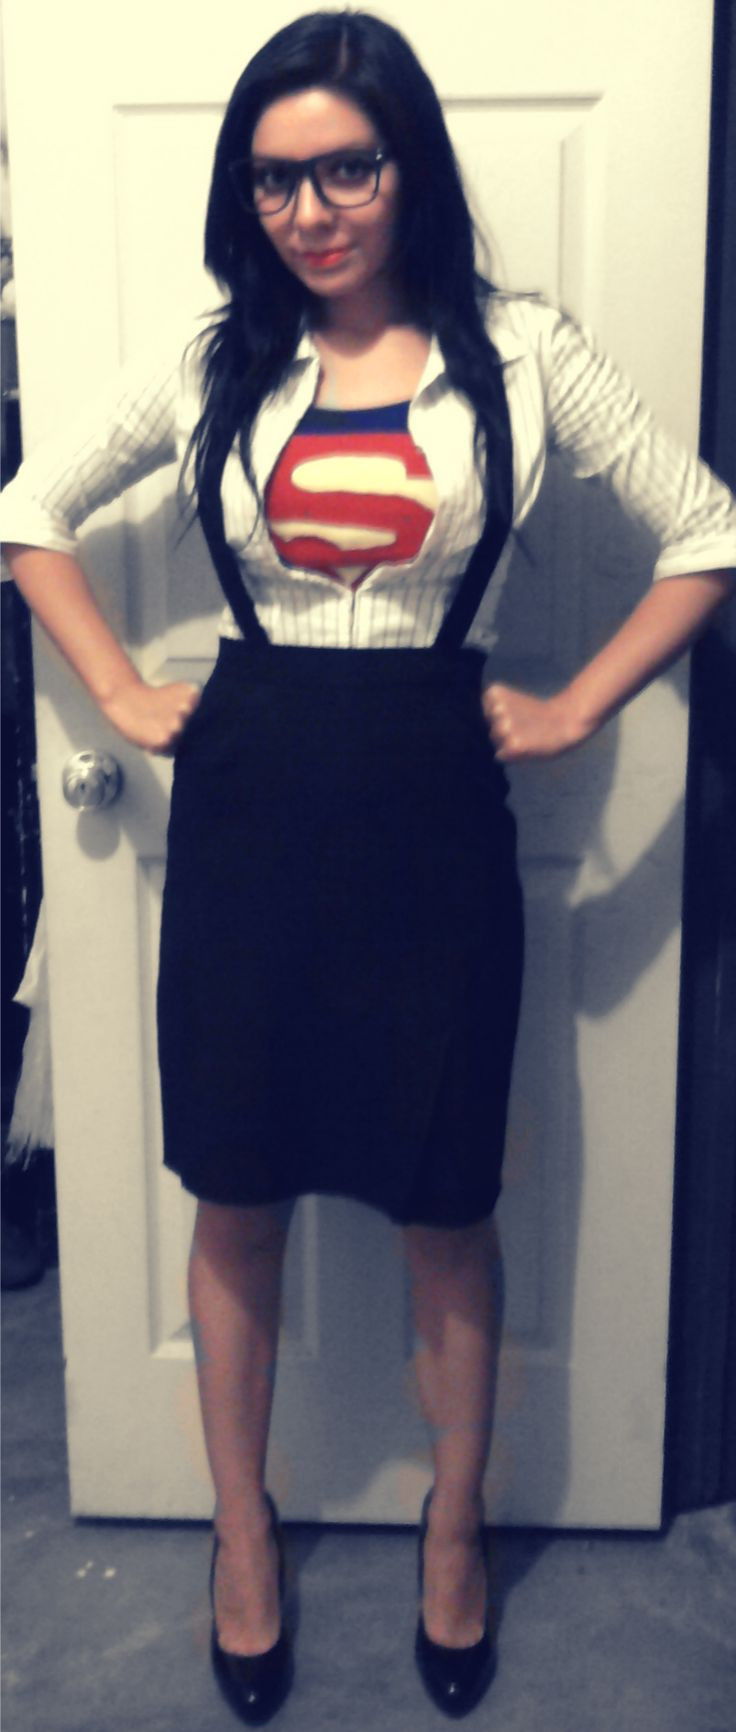 Best ideas about DIY Female Superhero Costumes
. Save or Pin Best 20 Superhero costumes women ideas on Pinterest Now.